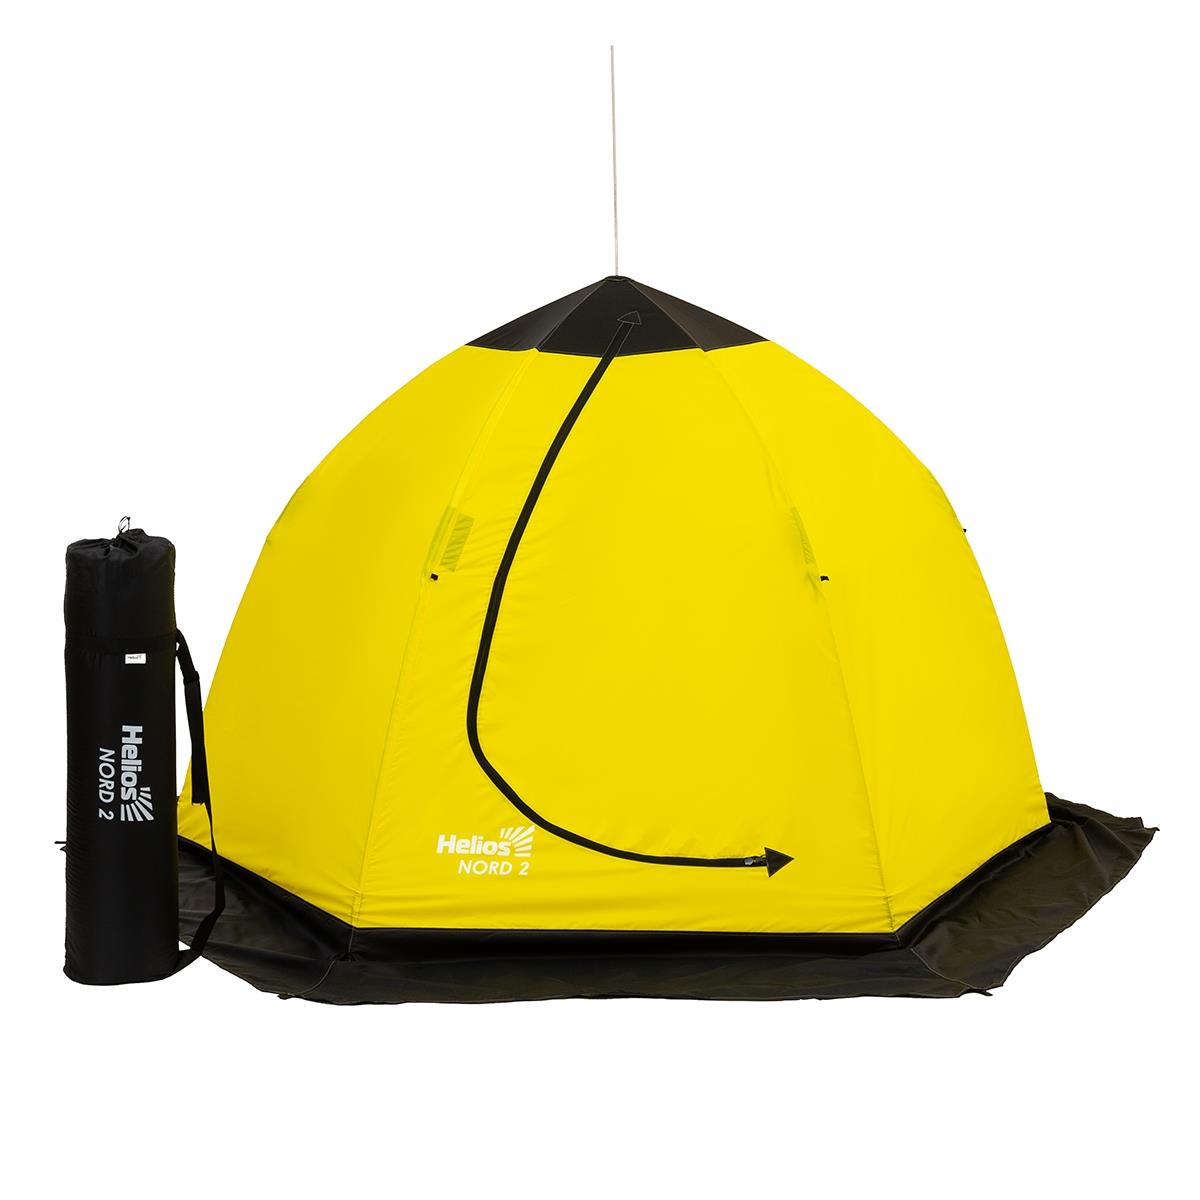 Палатка-зонт 2-местная NORD-2 с дышащим верхом Helios 130494 NORD-2 Helios - фото 1